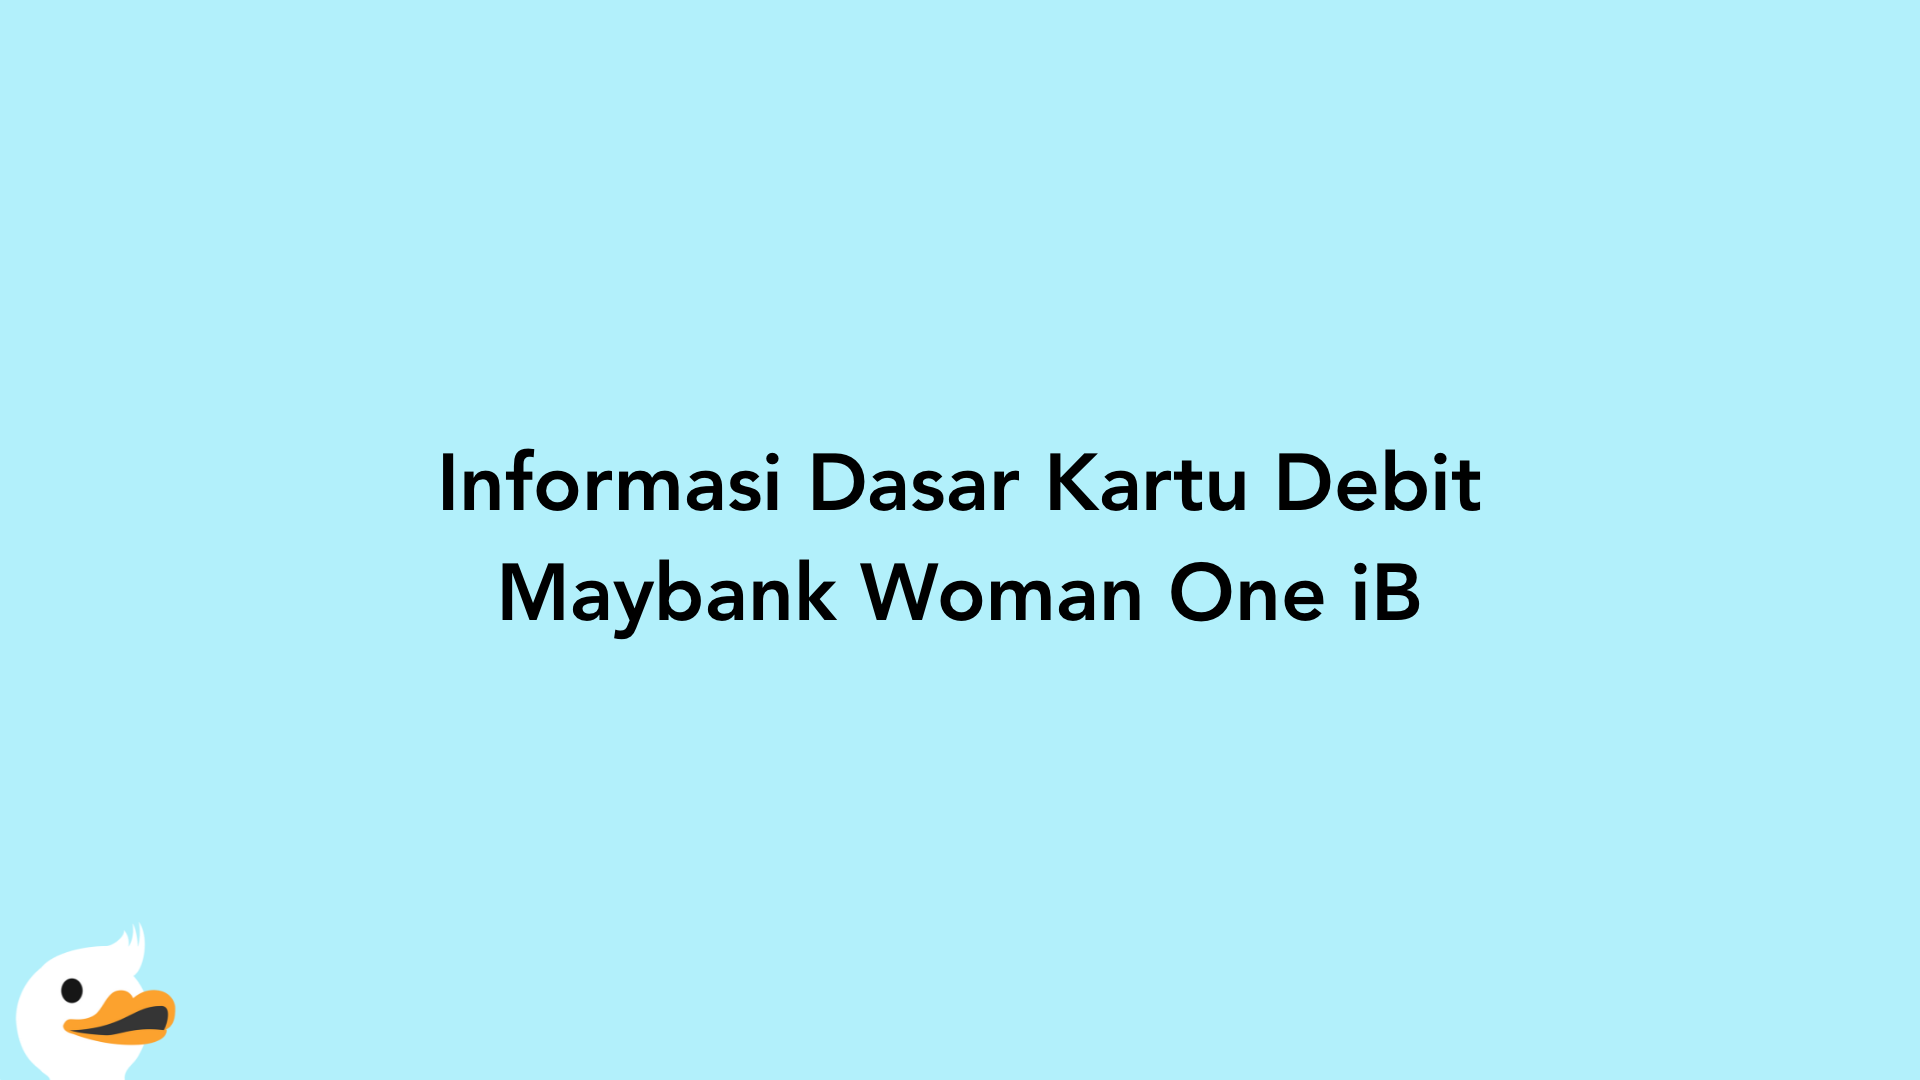 Informasi Dasar Kartu Debit Maybank Woman One iB